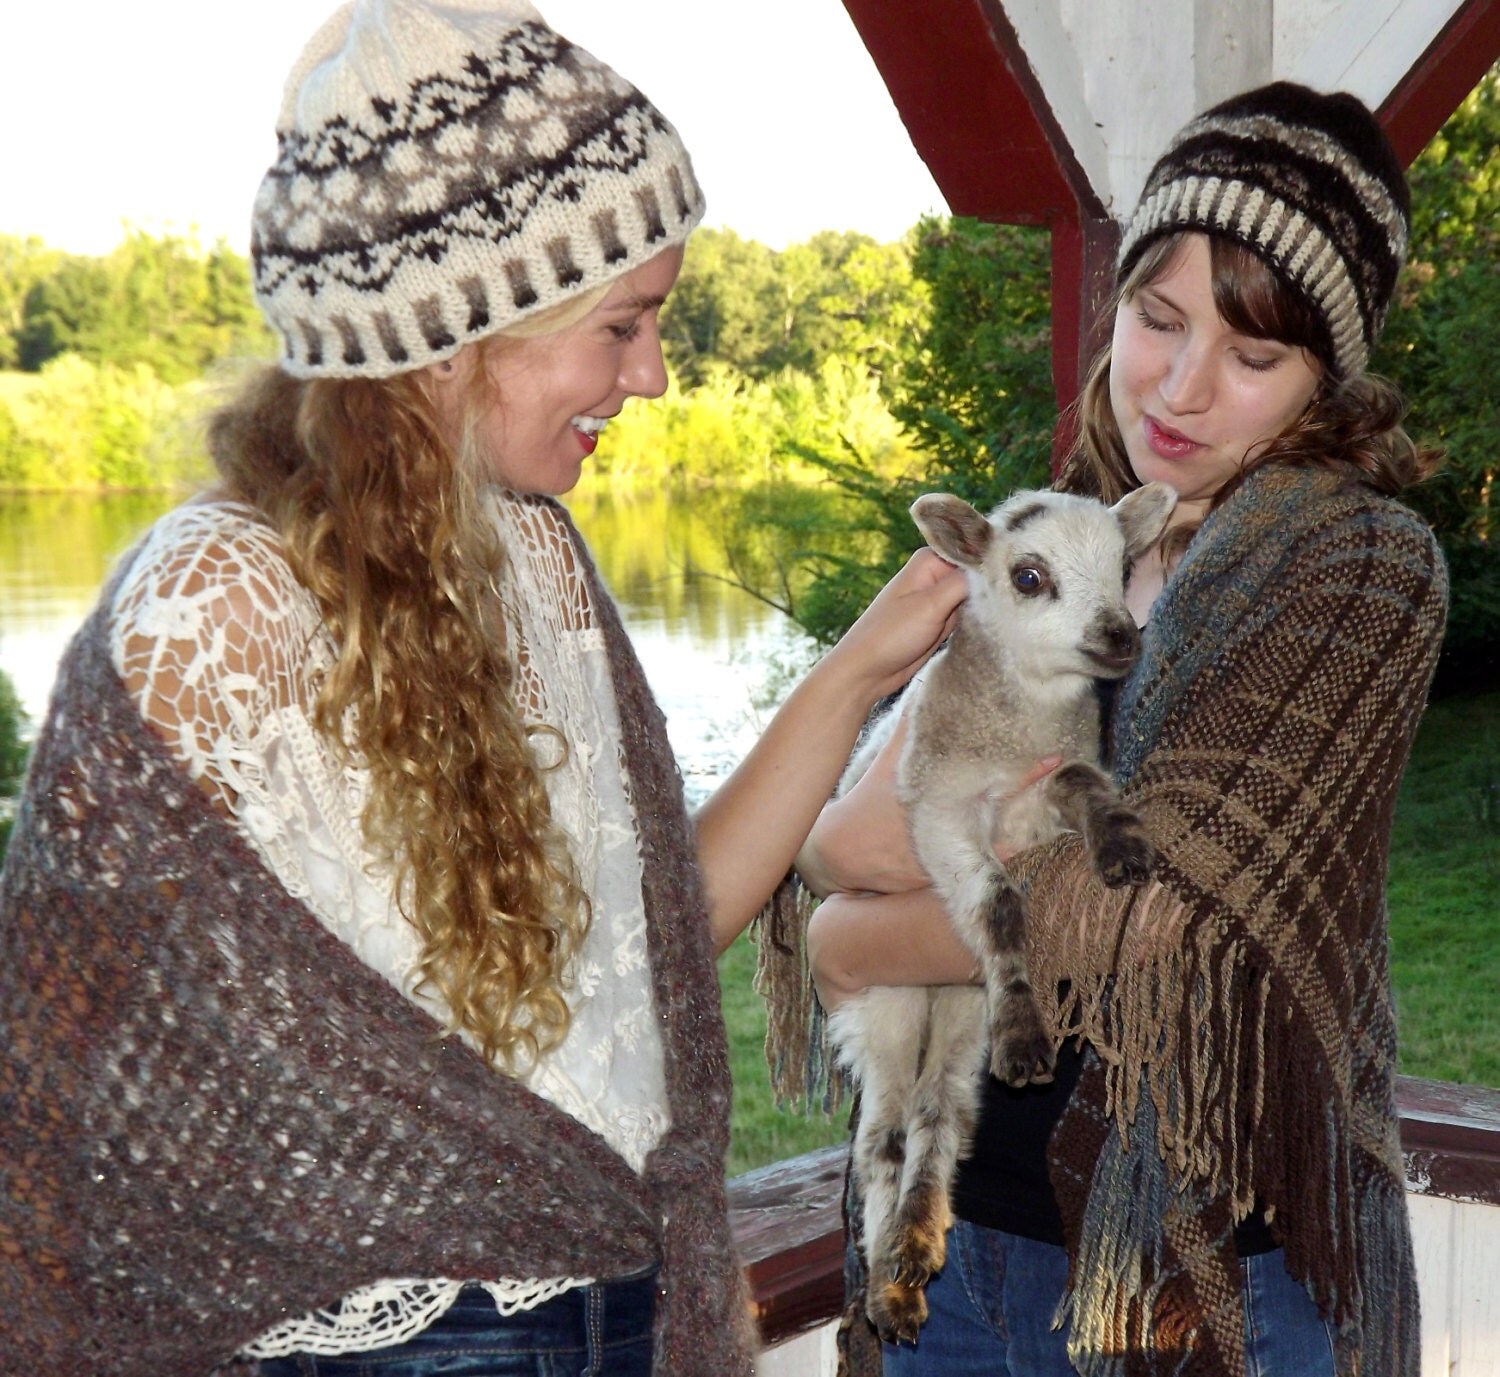 Shetland hats, knitted and woven shawls..Shetland lamb